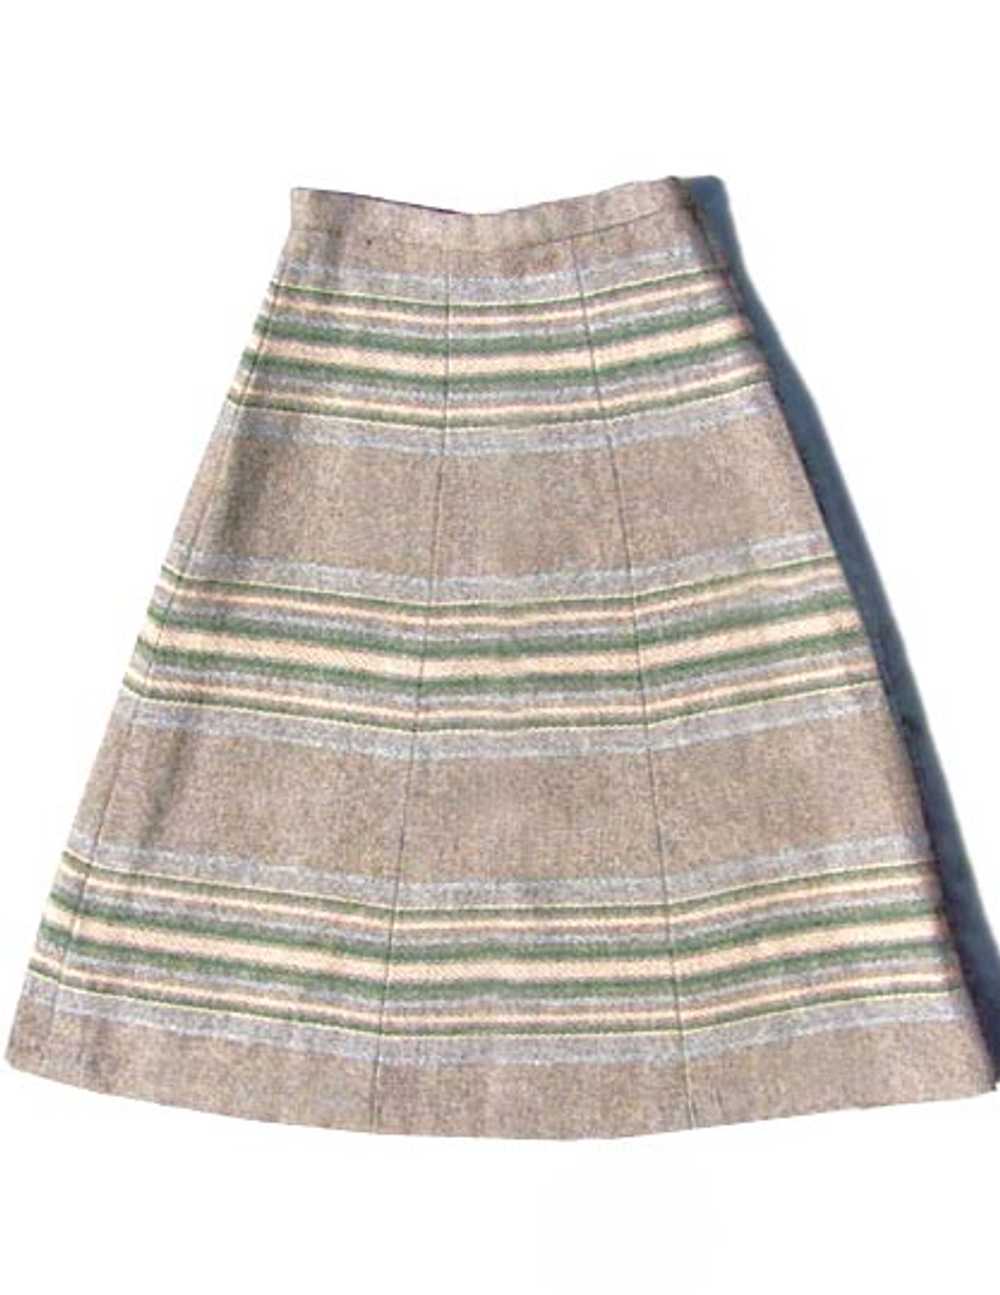 Scots gored tweed skirt - image 1